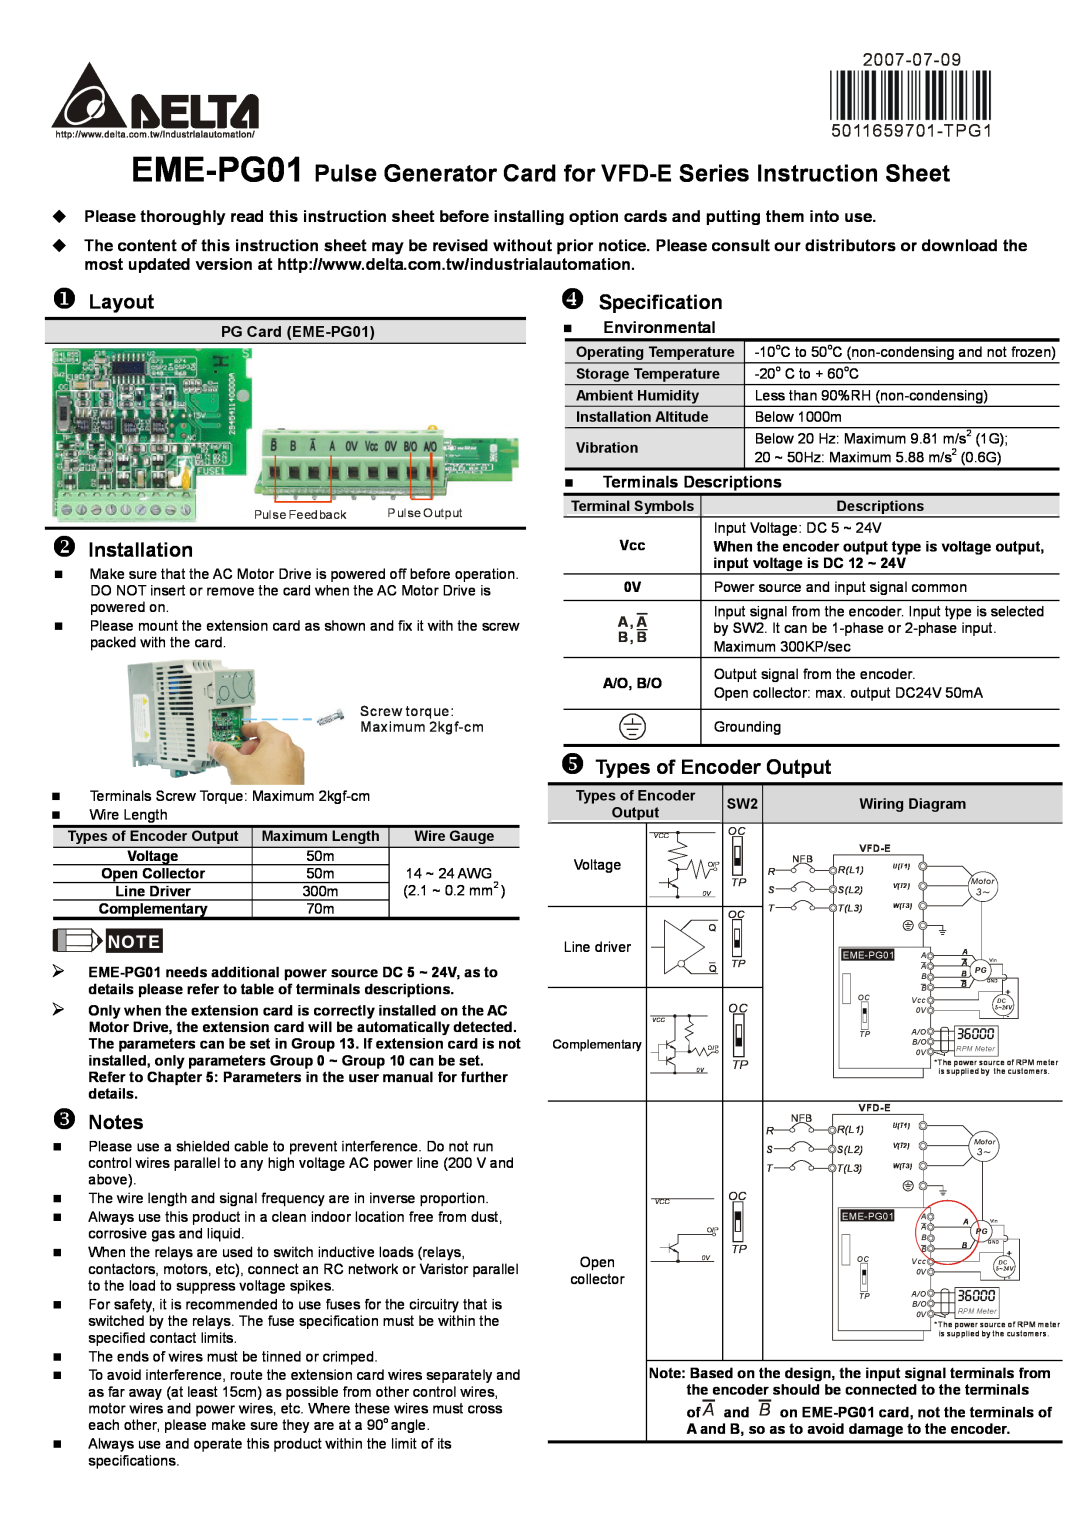 Delta Electronics instruction sheet Open, EME-PG01 Pulse Generator Card for VFD-E Series Instruction Sheet, X Layout 